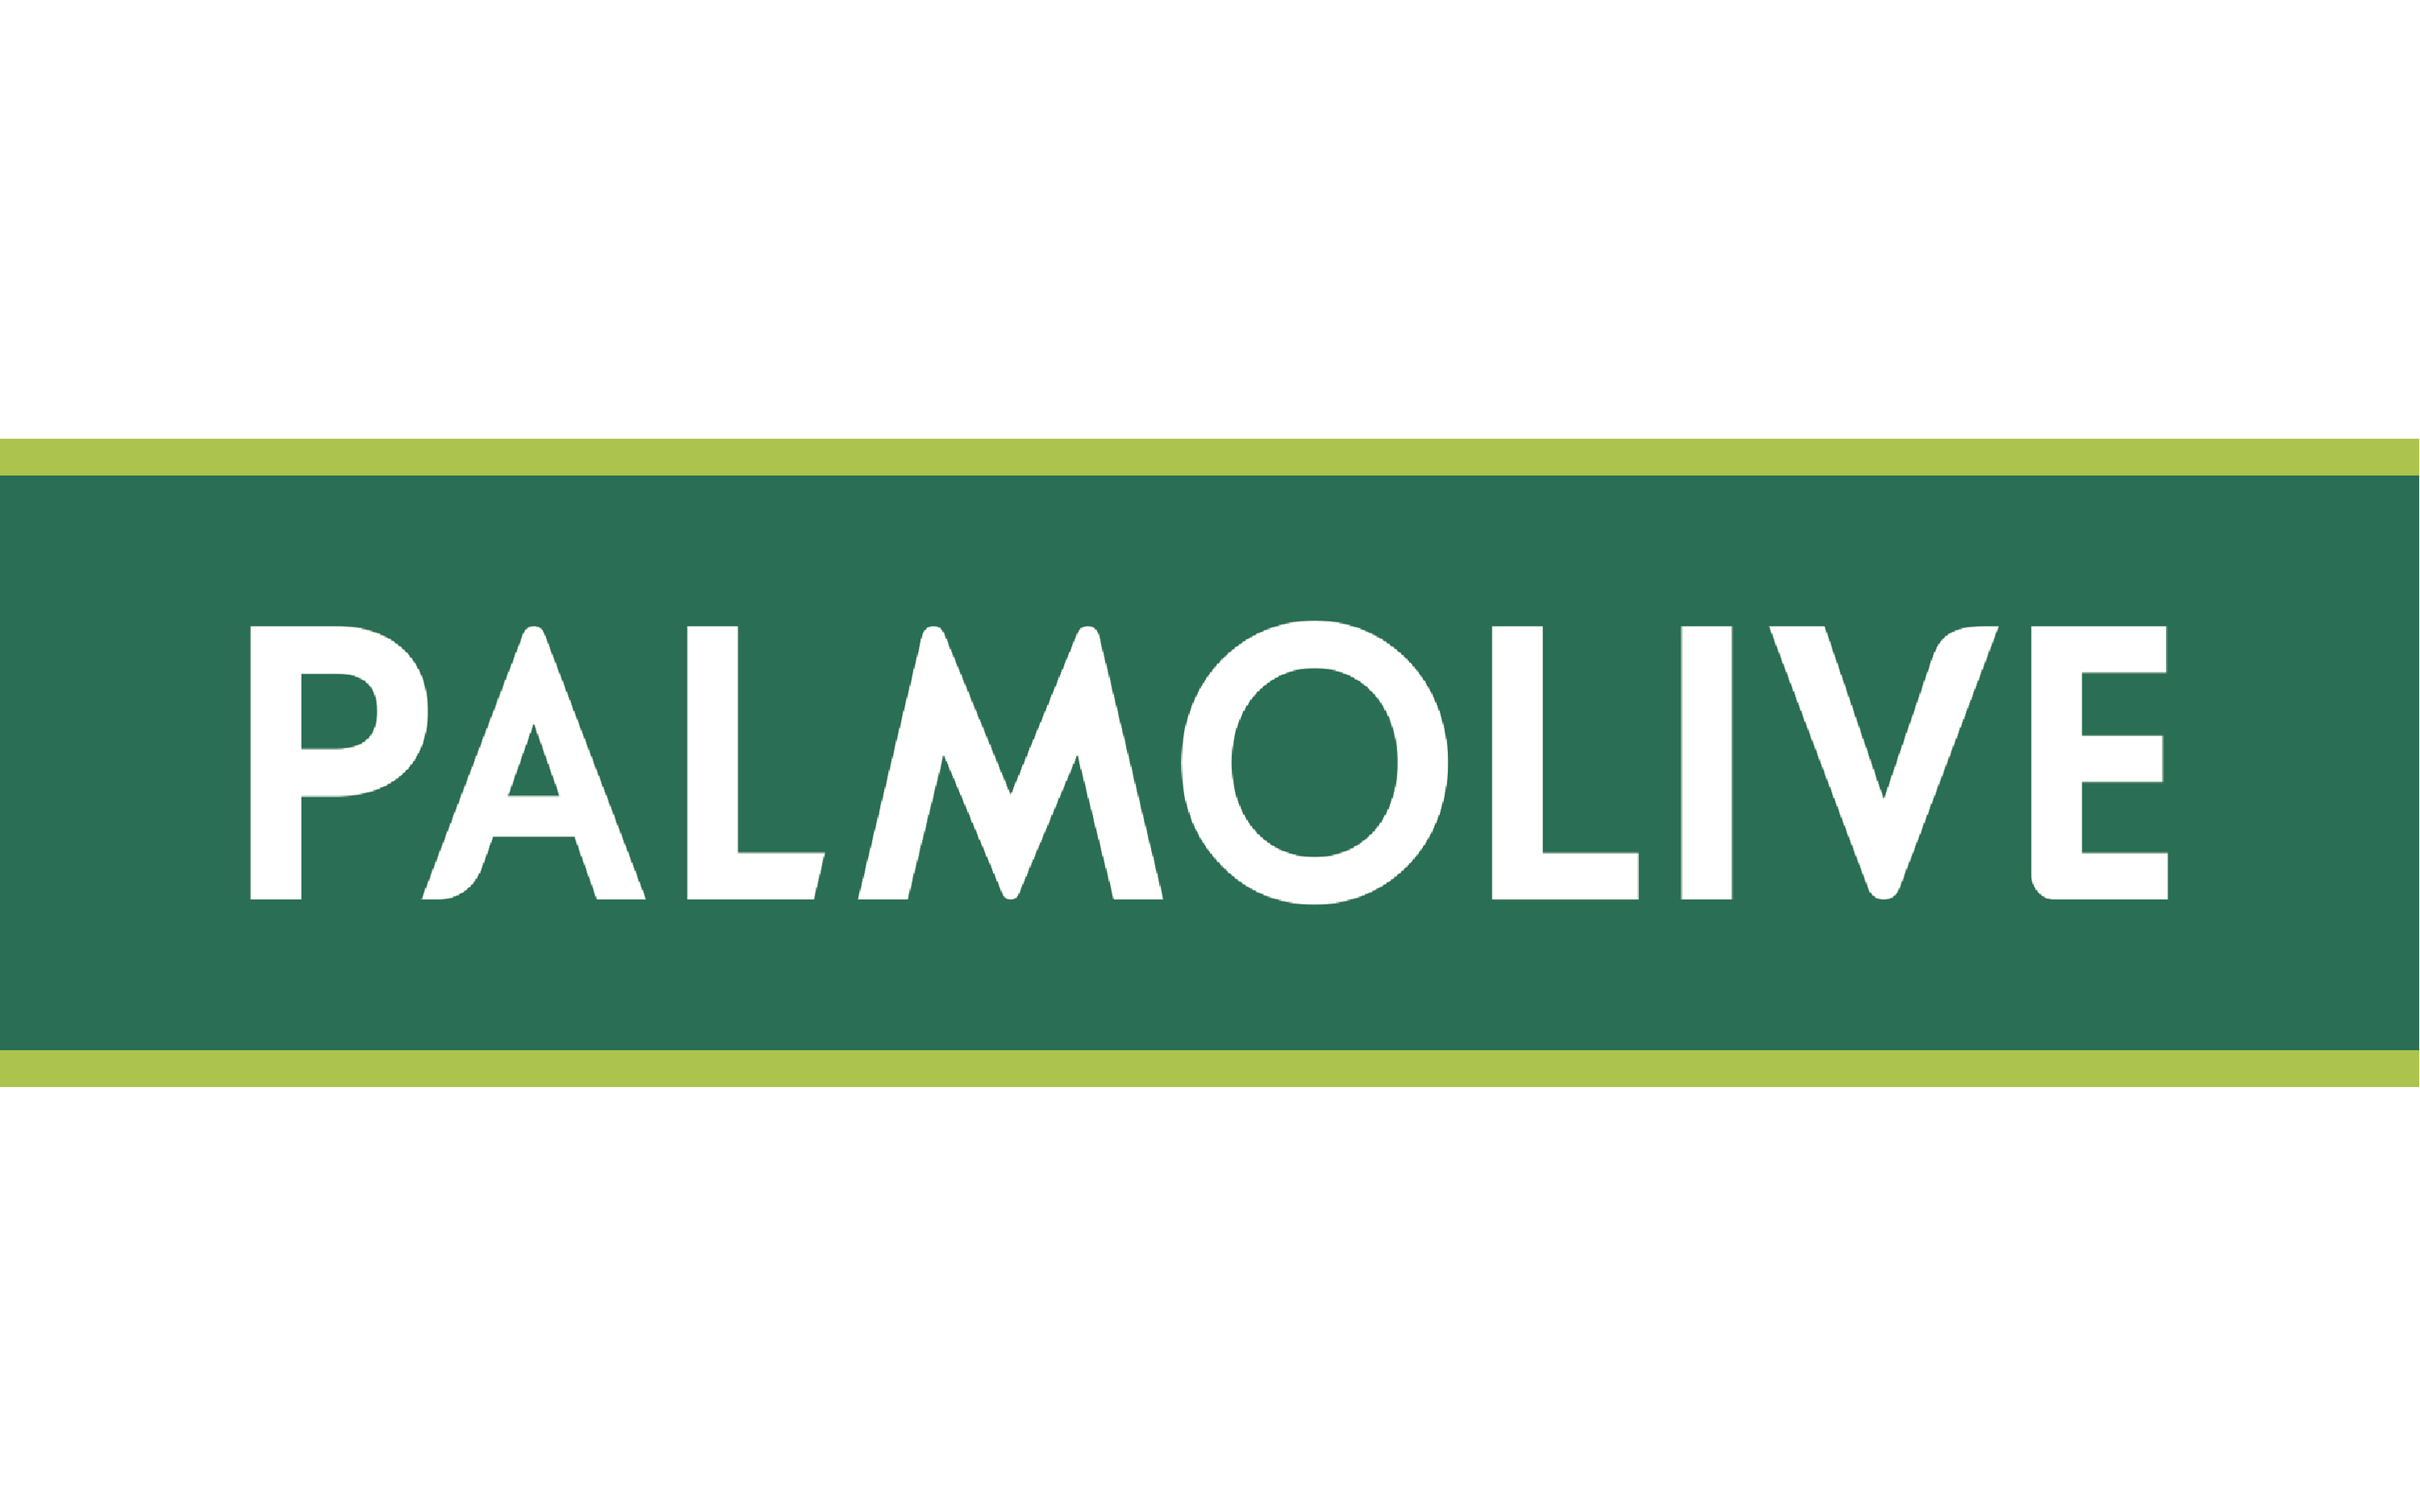 Palmolive Brand Logo